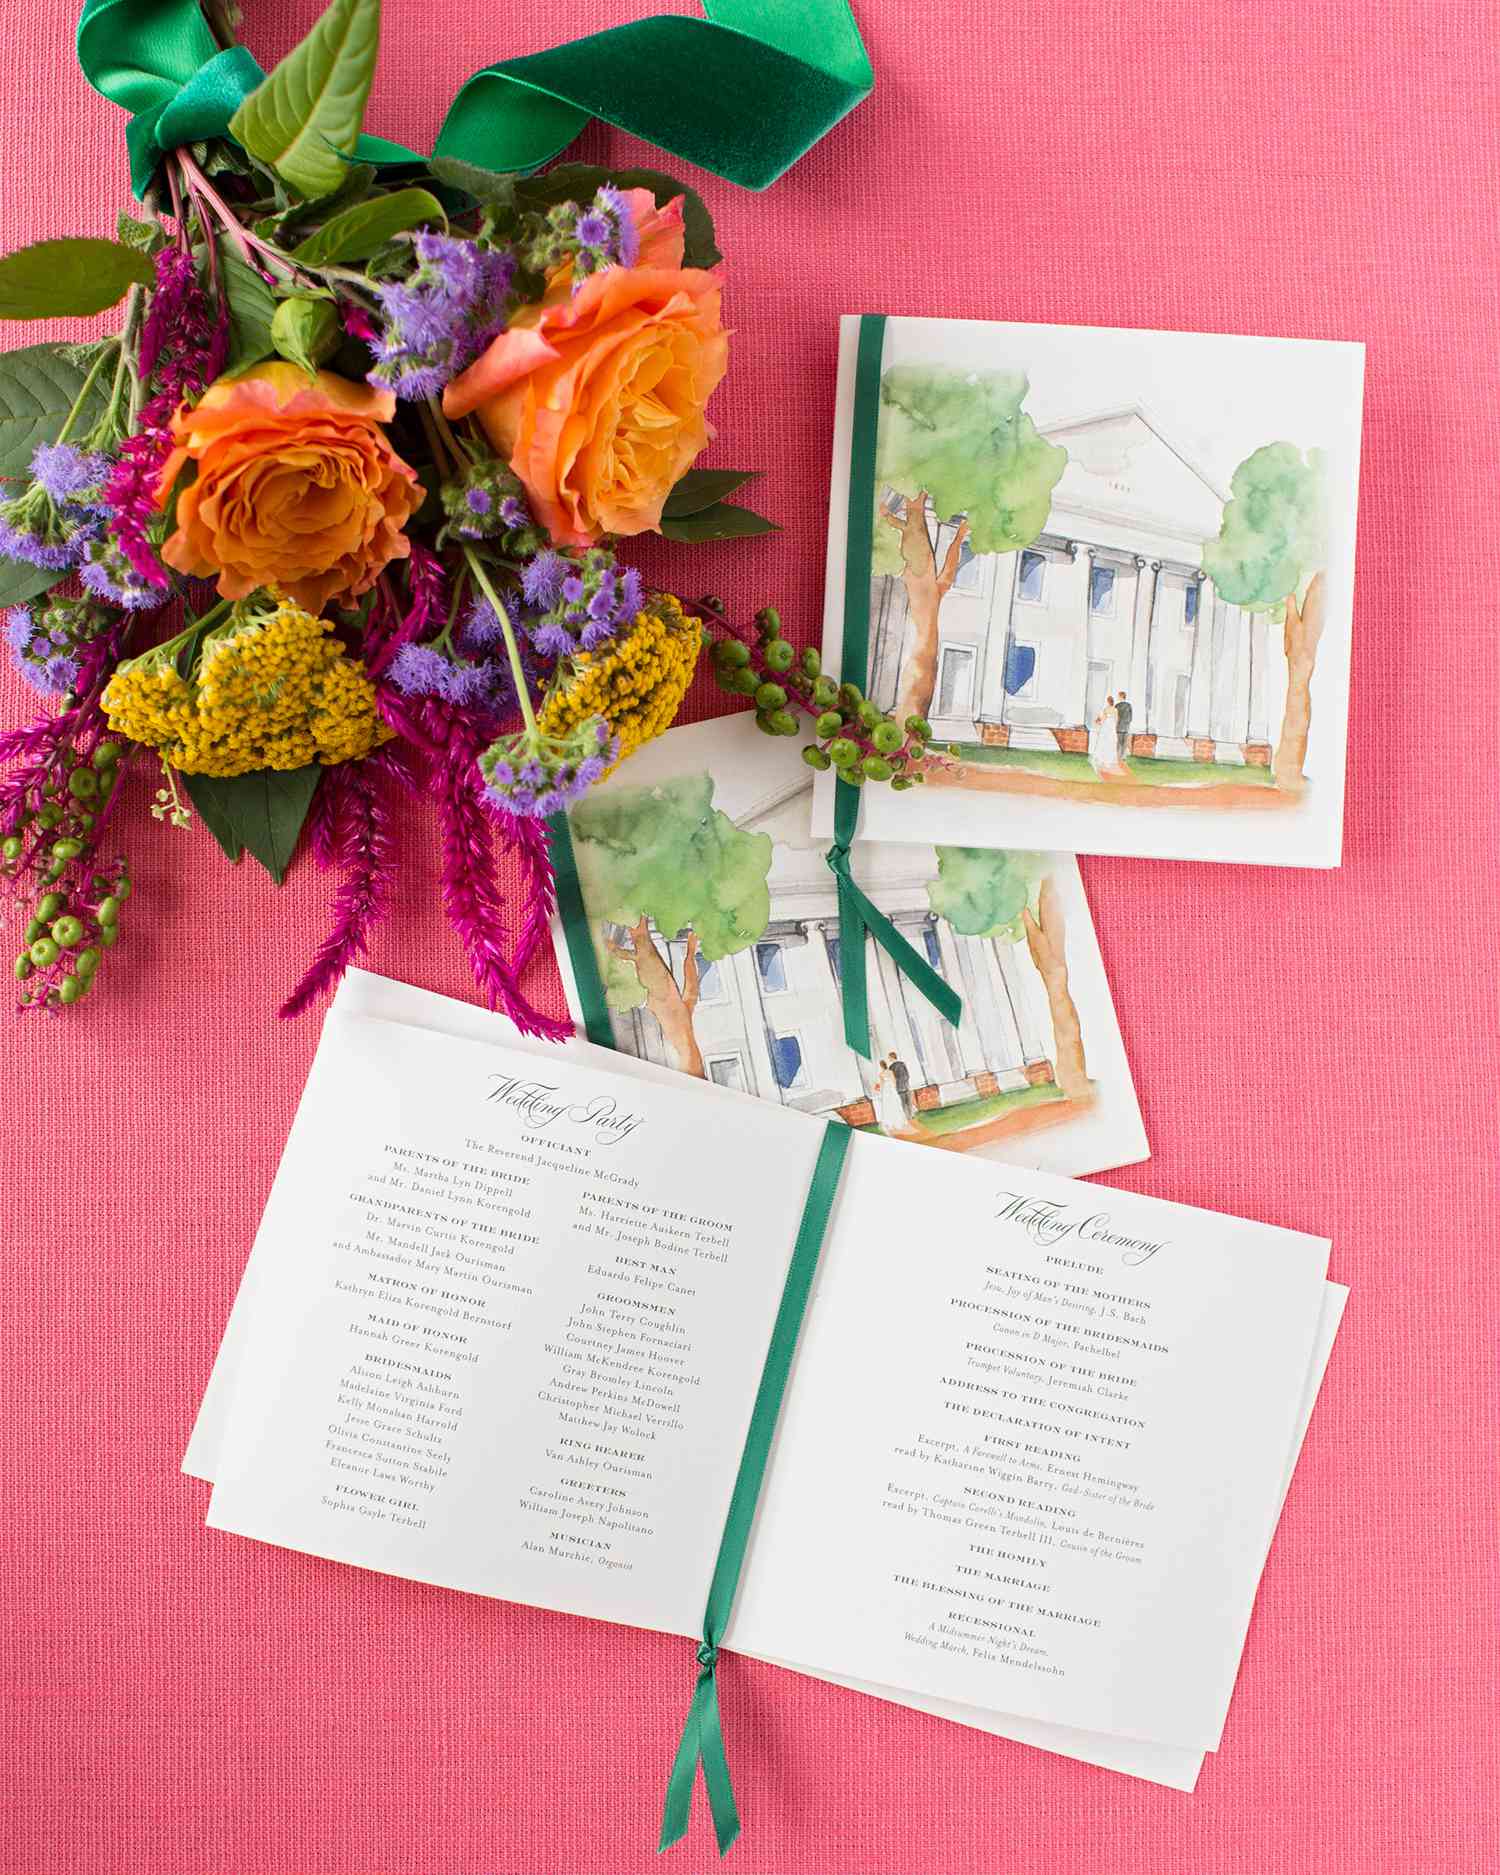 madelyn jon wedding program and flowers